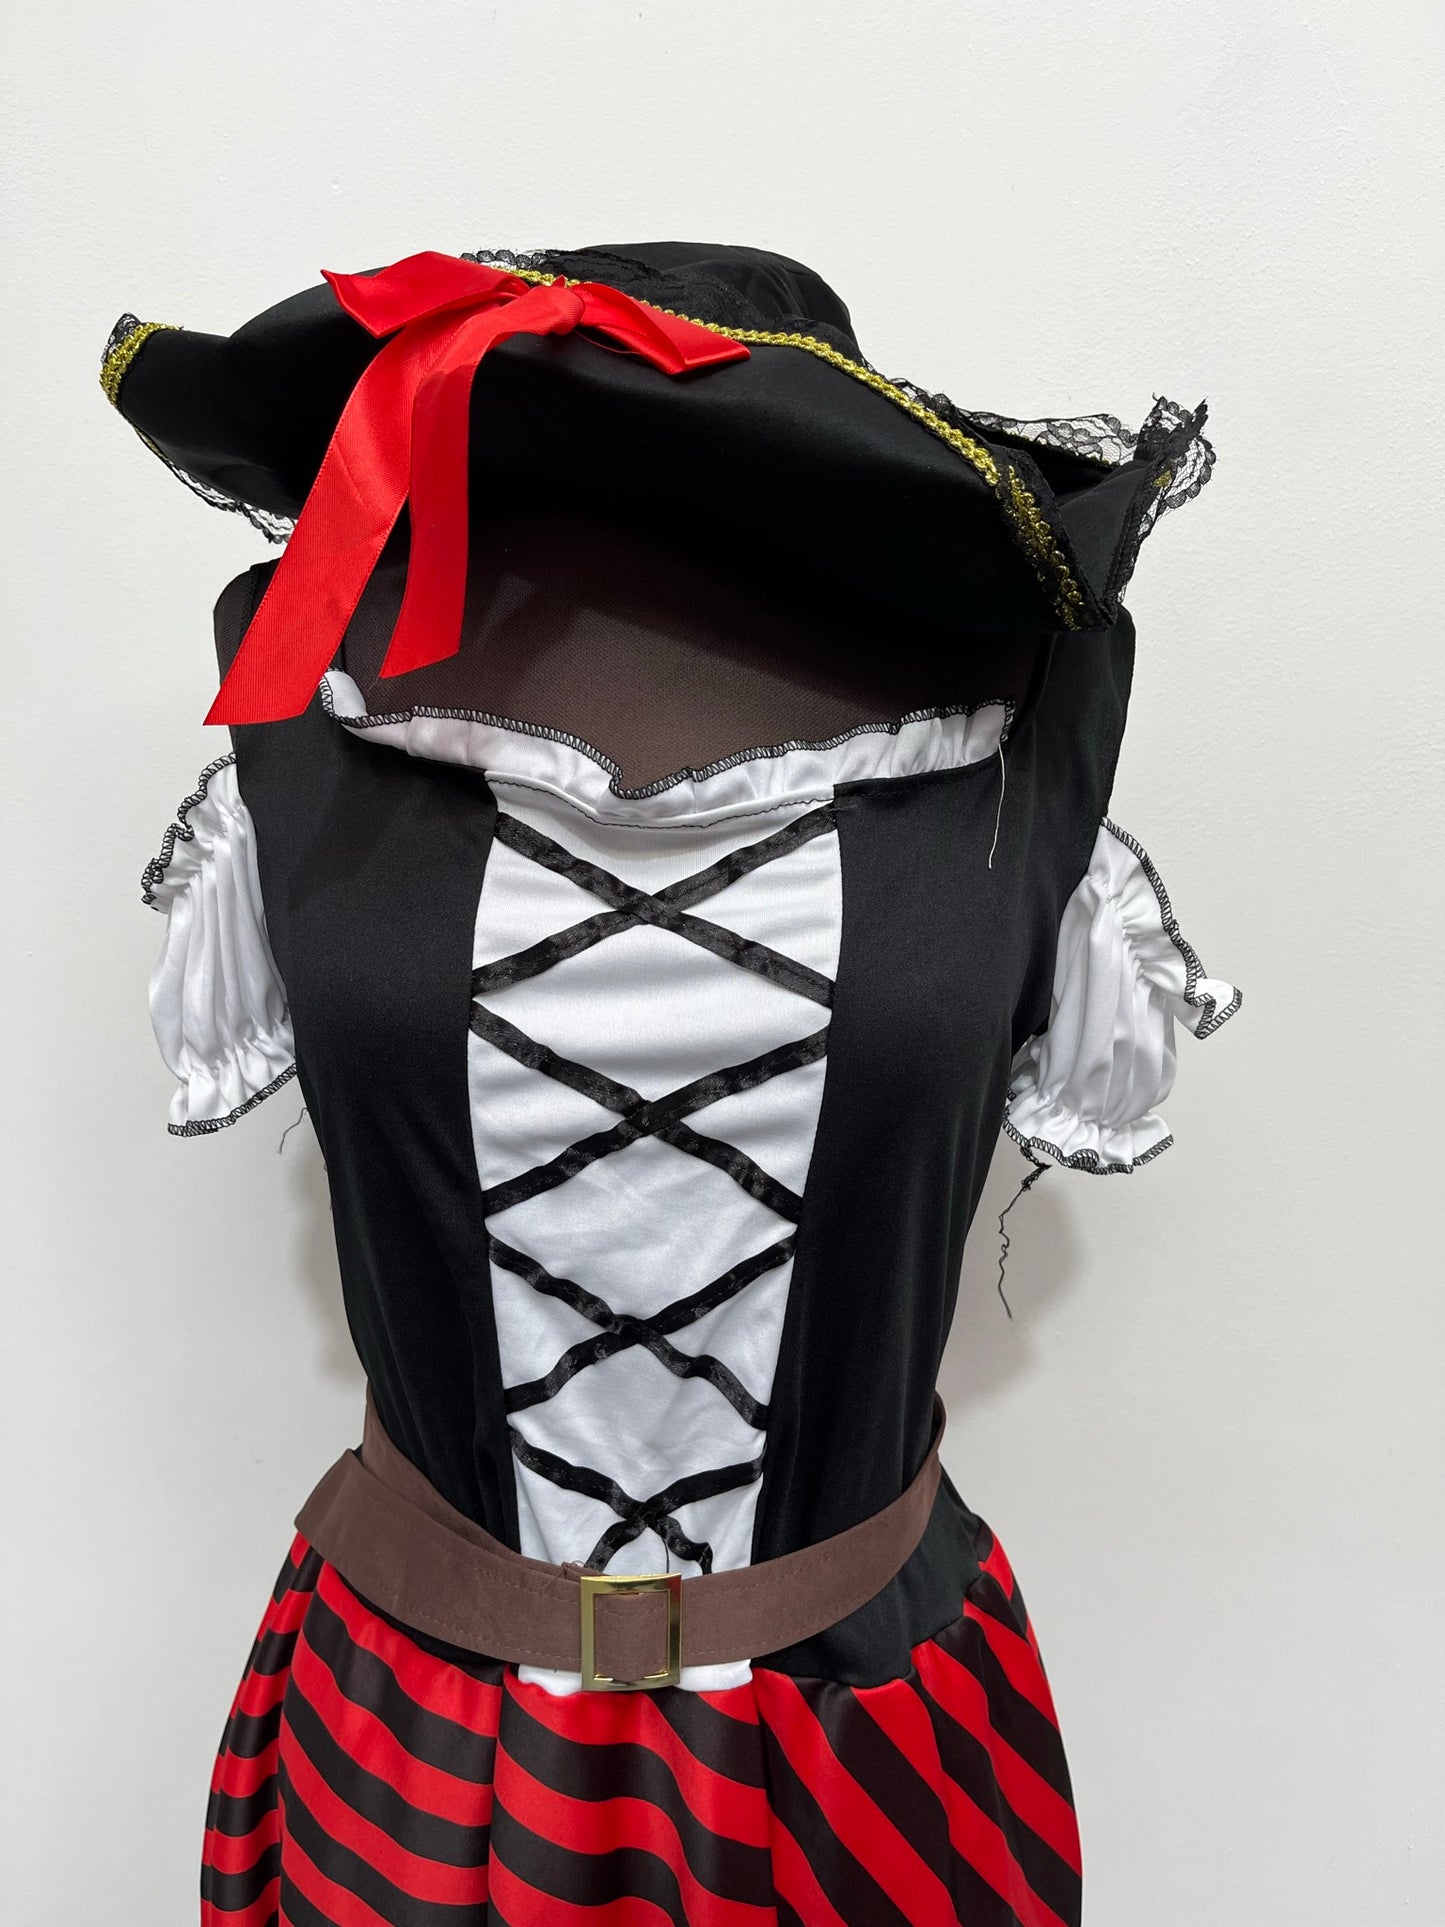 New Lady Pirate Costume Size Medium